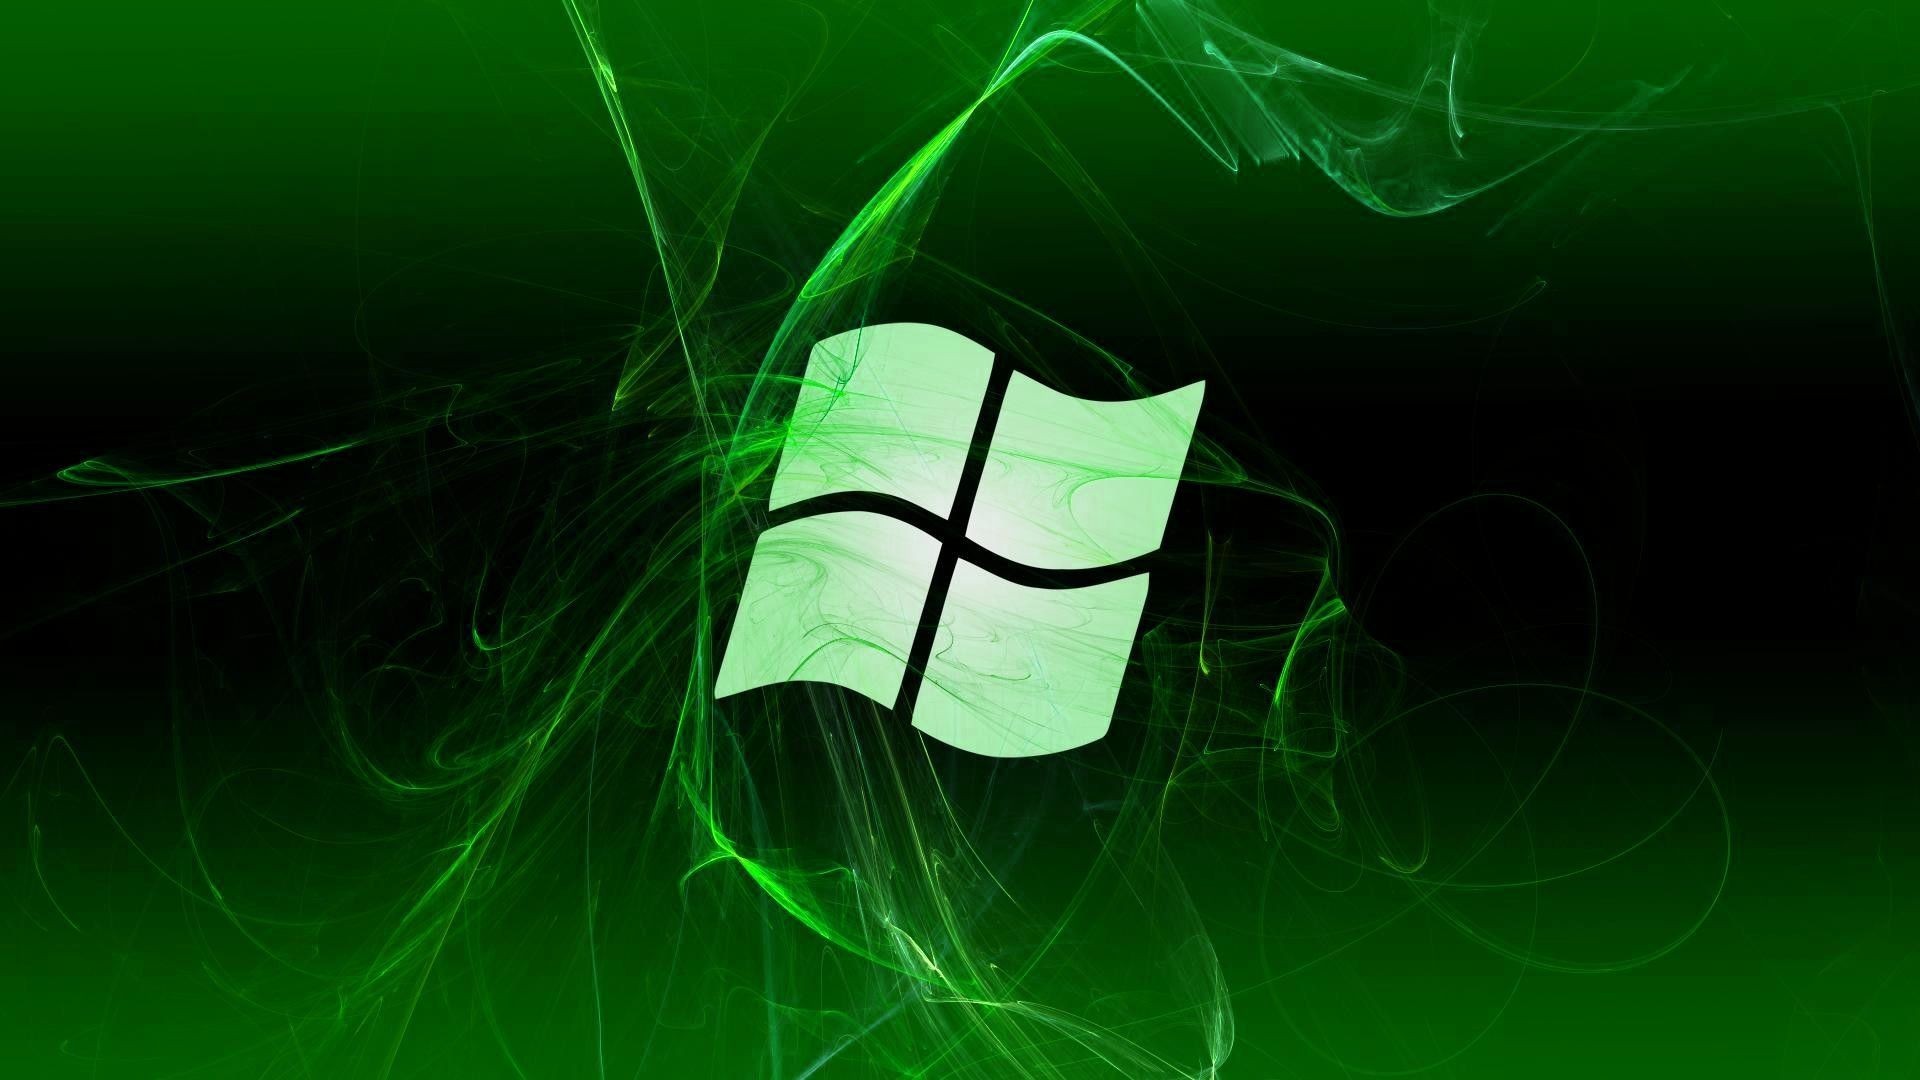 Microsoft Windows Digital Art Green Background Logo 19x1080 Wallpaper Wallhaven Cc